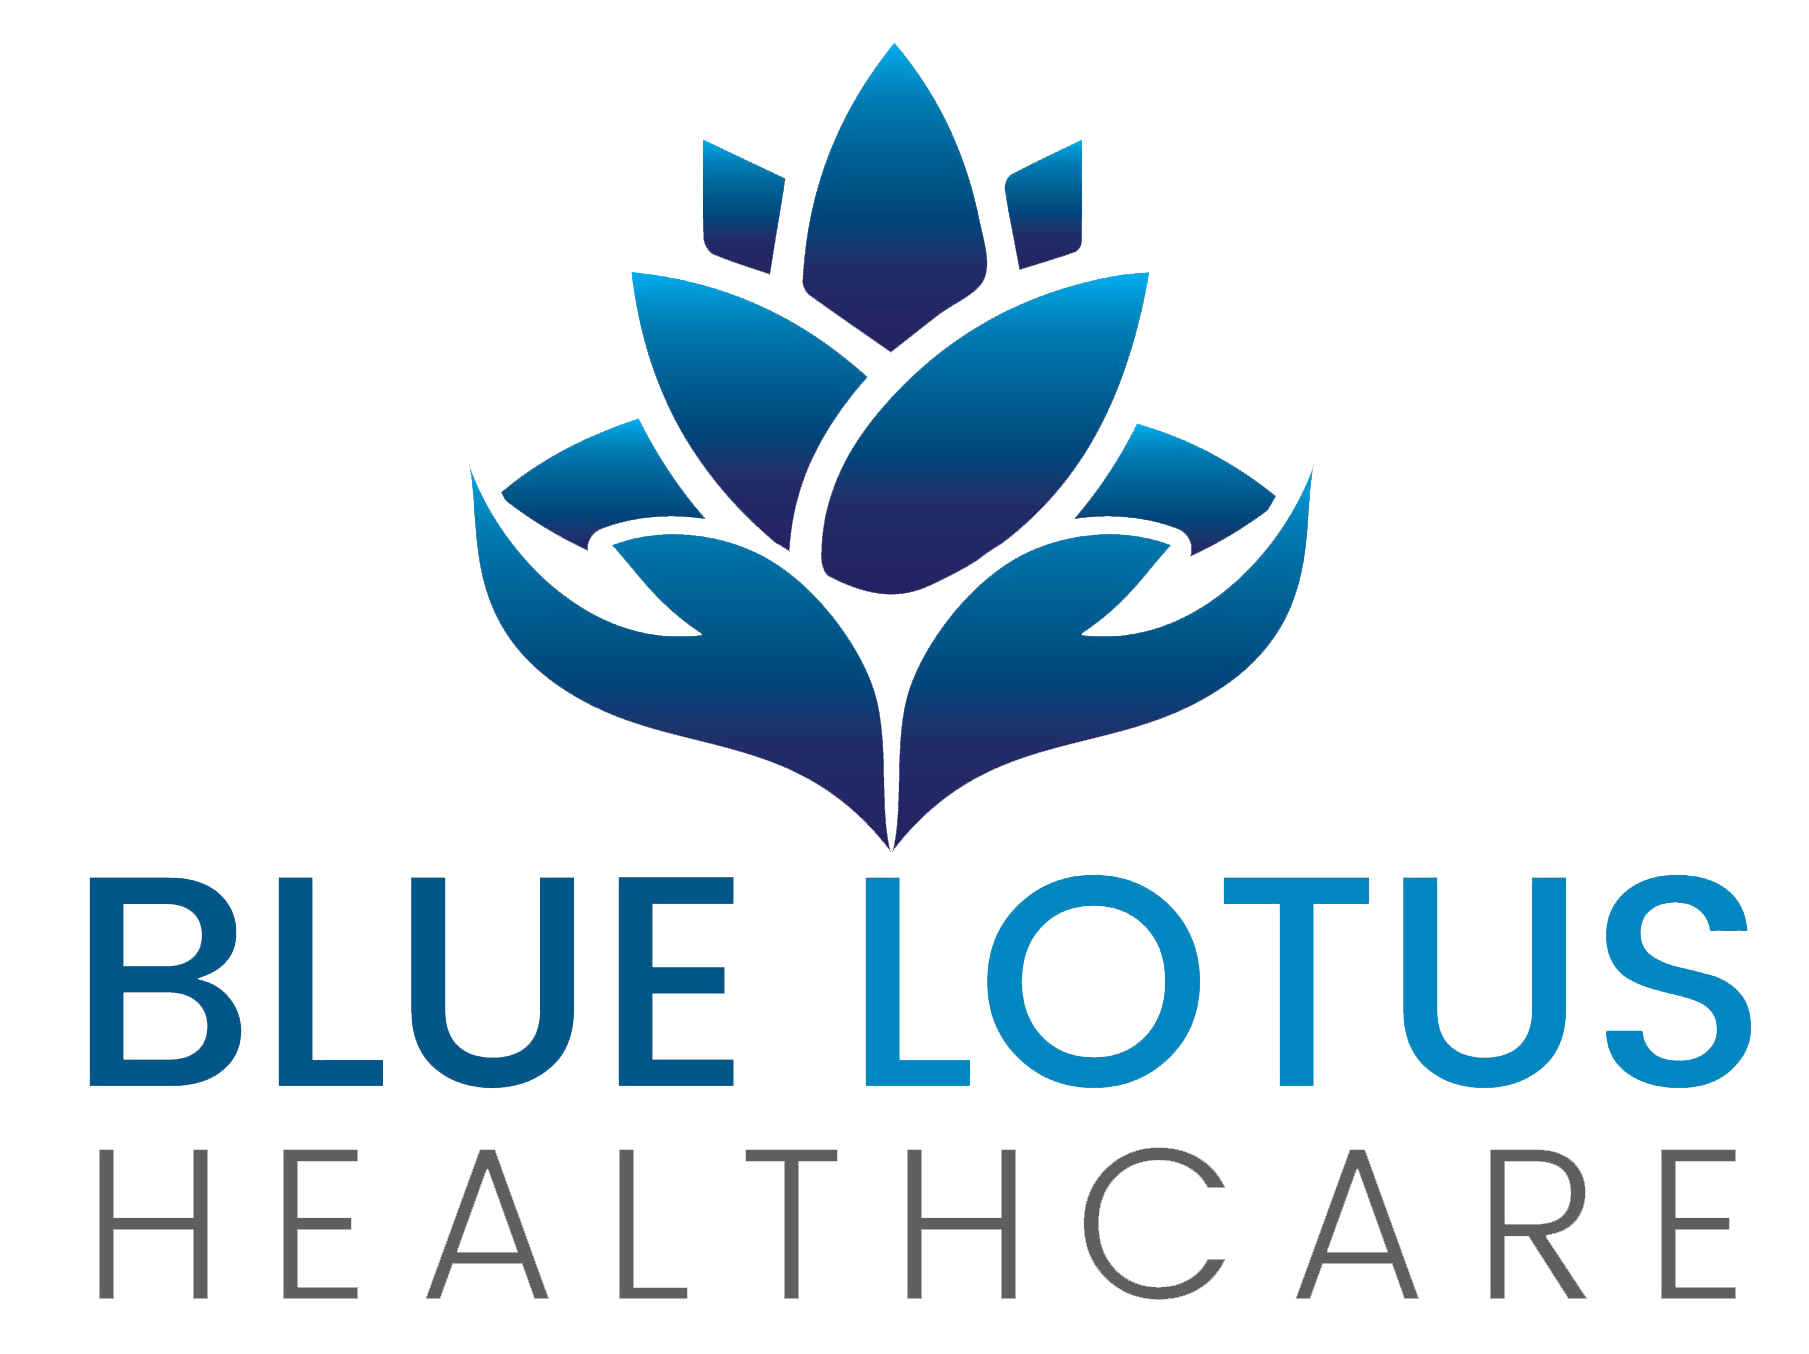 Blue Lotus Healthcare